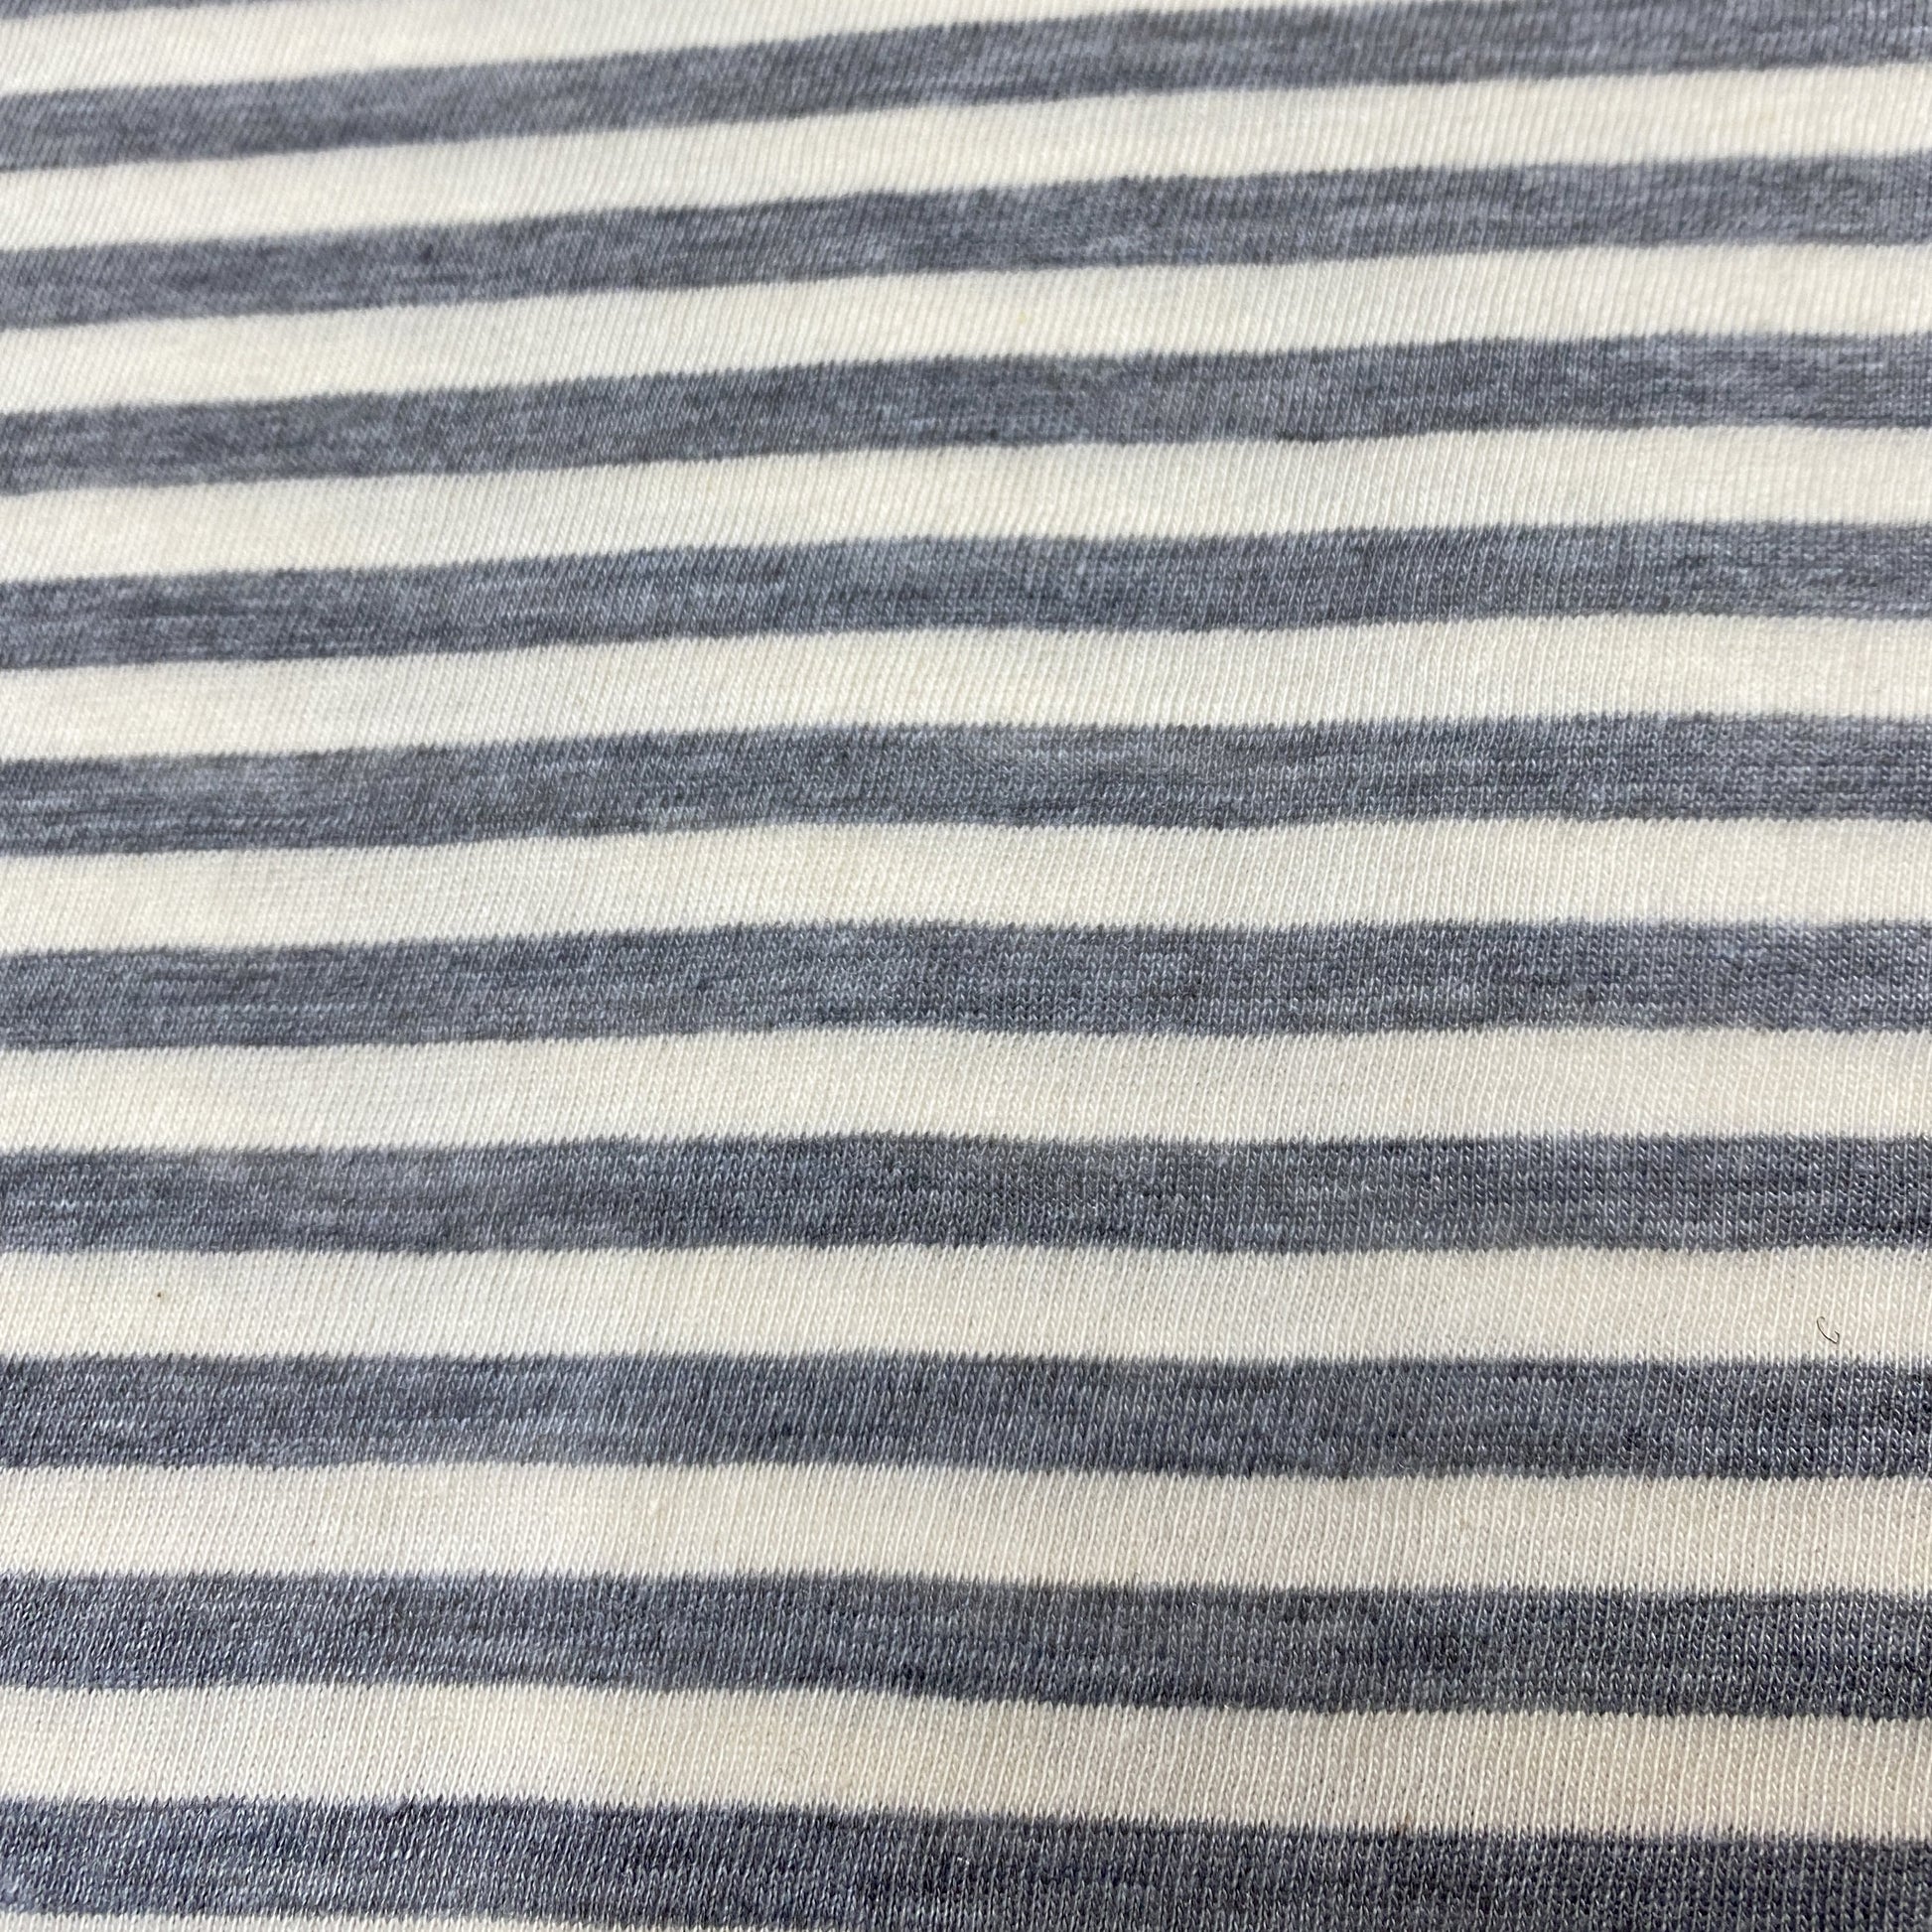 Gray and Natural Stripes on Hemp Jersey - Nature's Fabrics